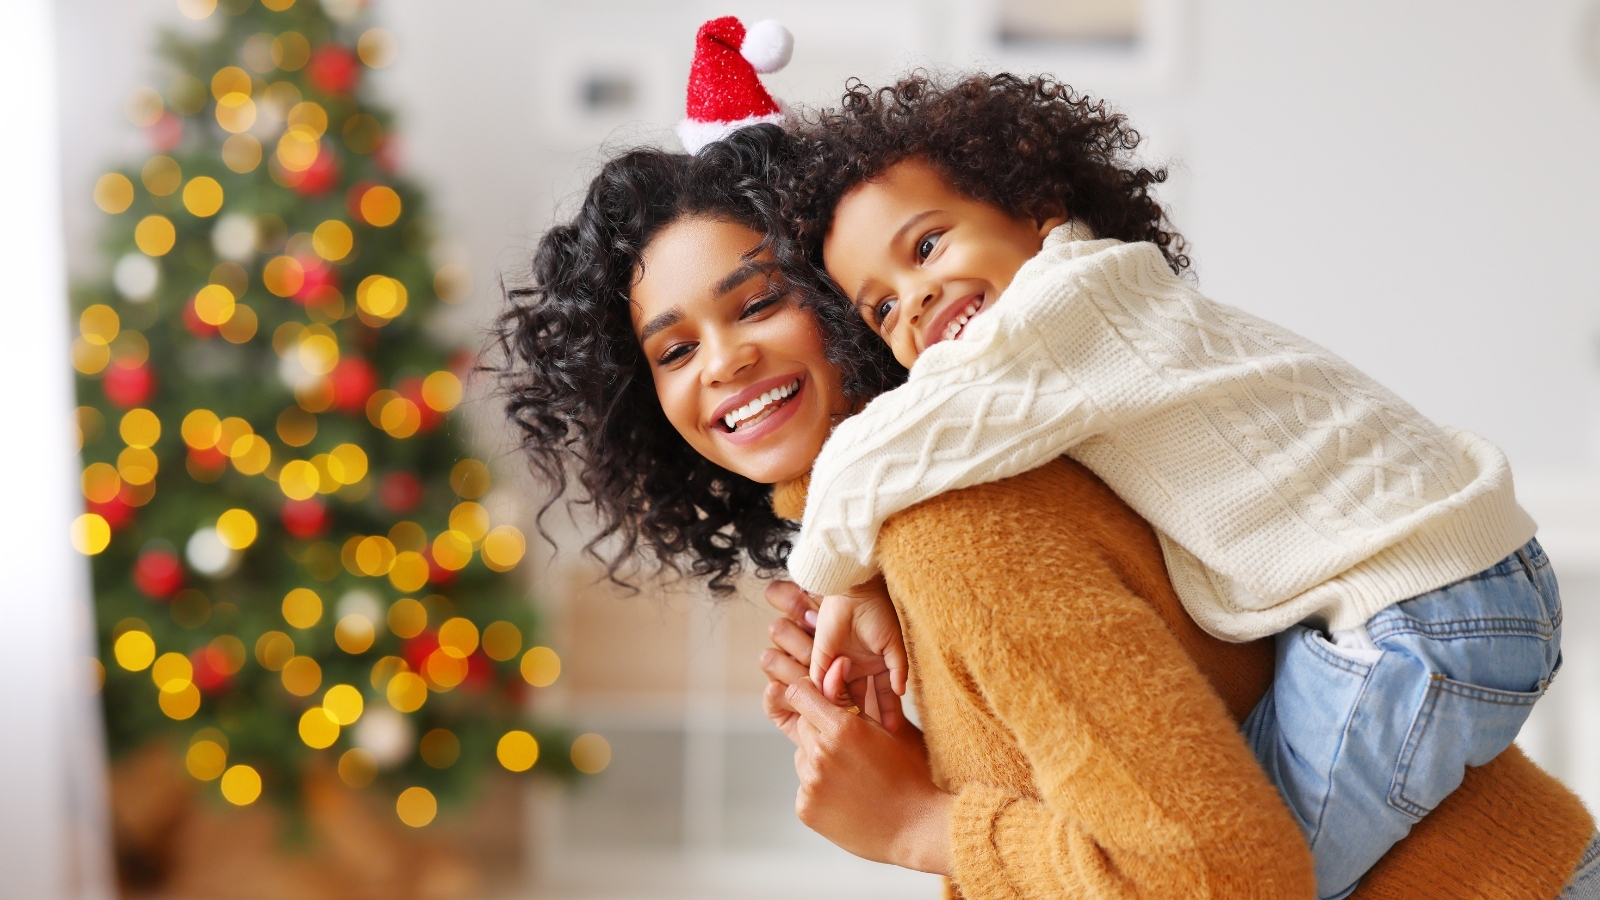 24 days of fun Christmas activities to enjoy with your kids {+ printable activity calendar}